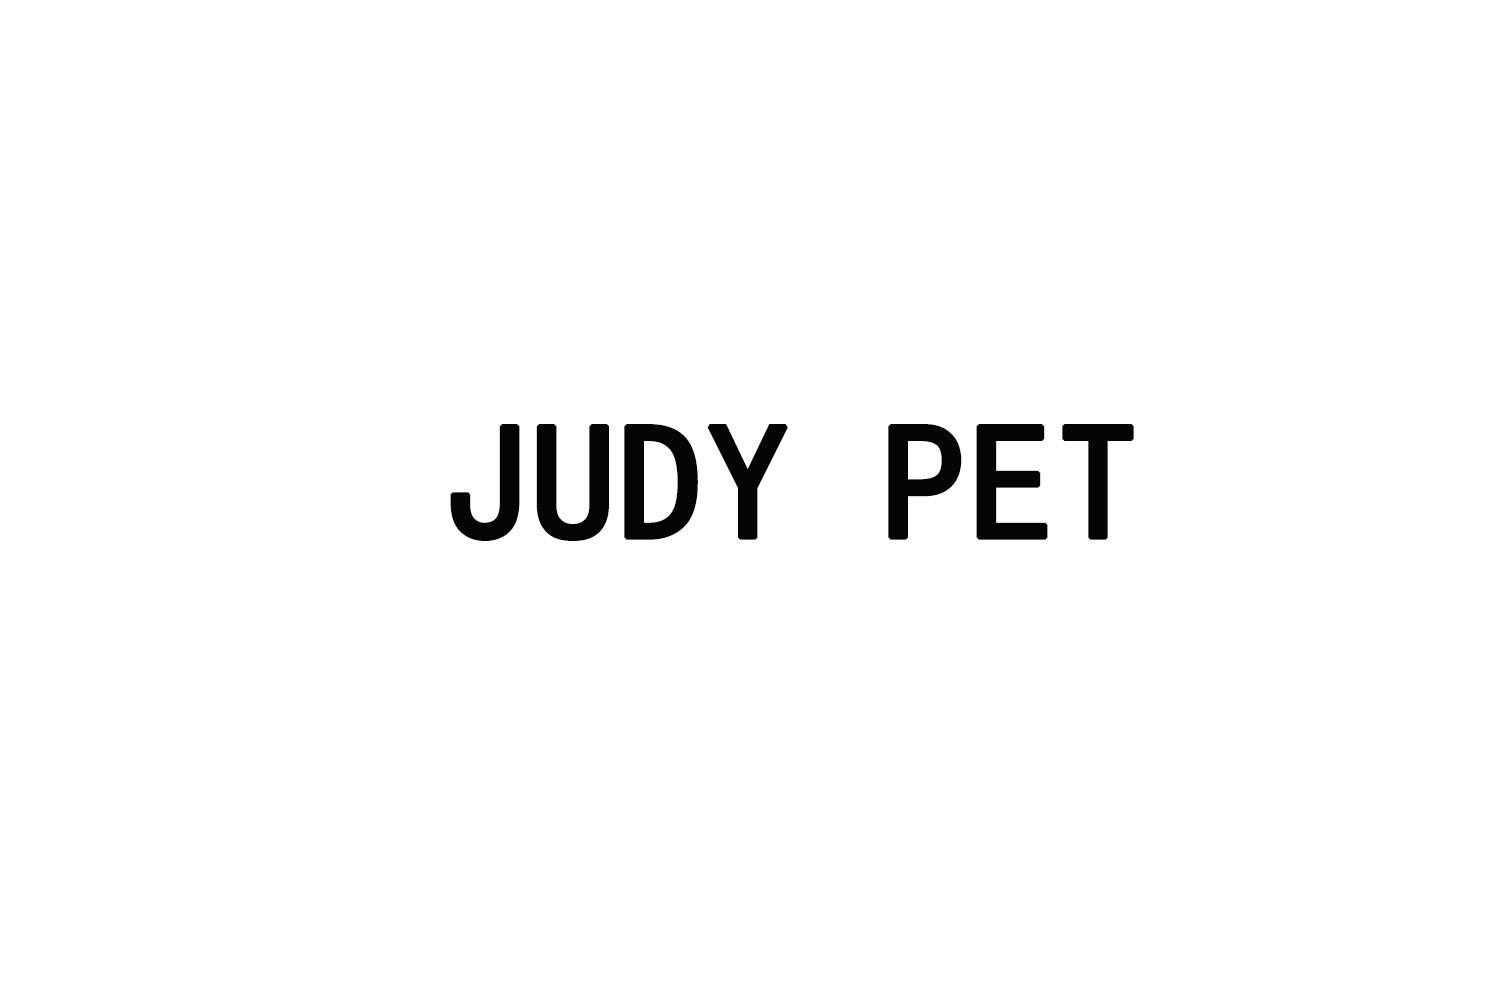 JUDY PET